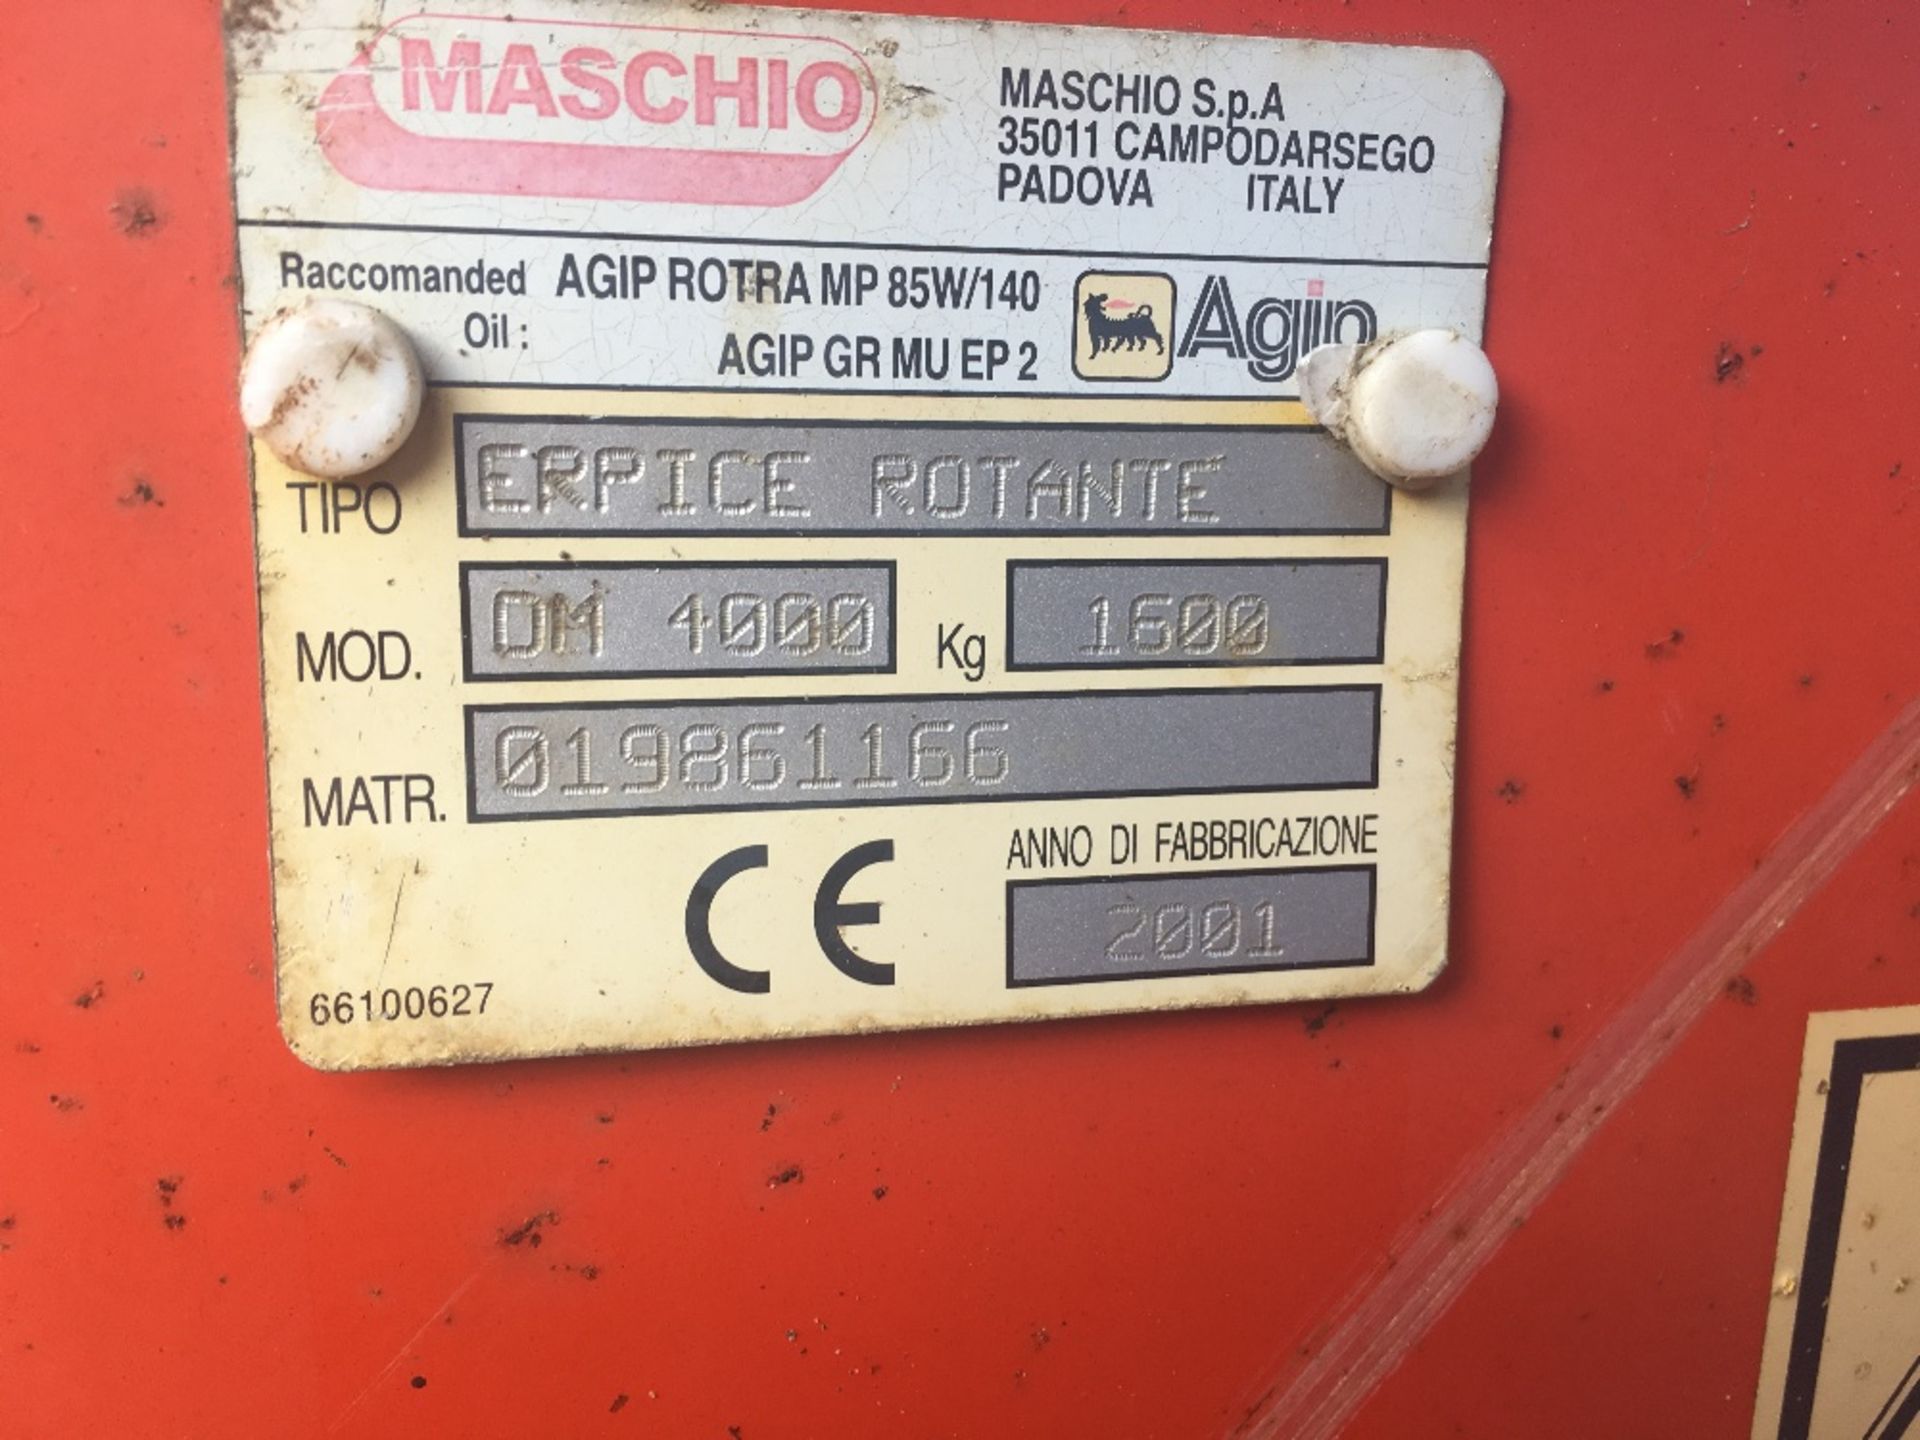 Maschio 4m Power Harrow, Erpice Rotante, Weight 1600kgs, - Image 5 of 9